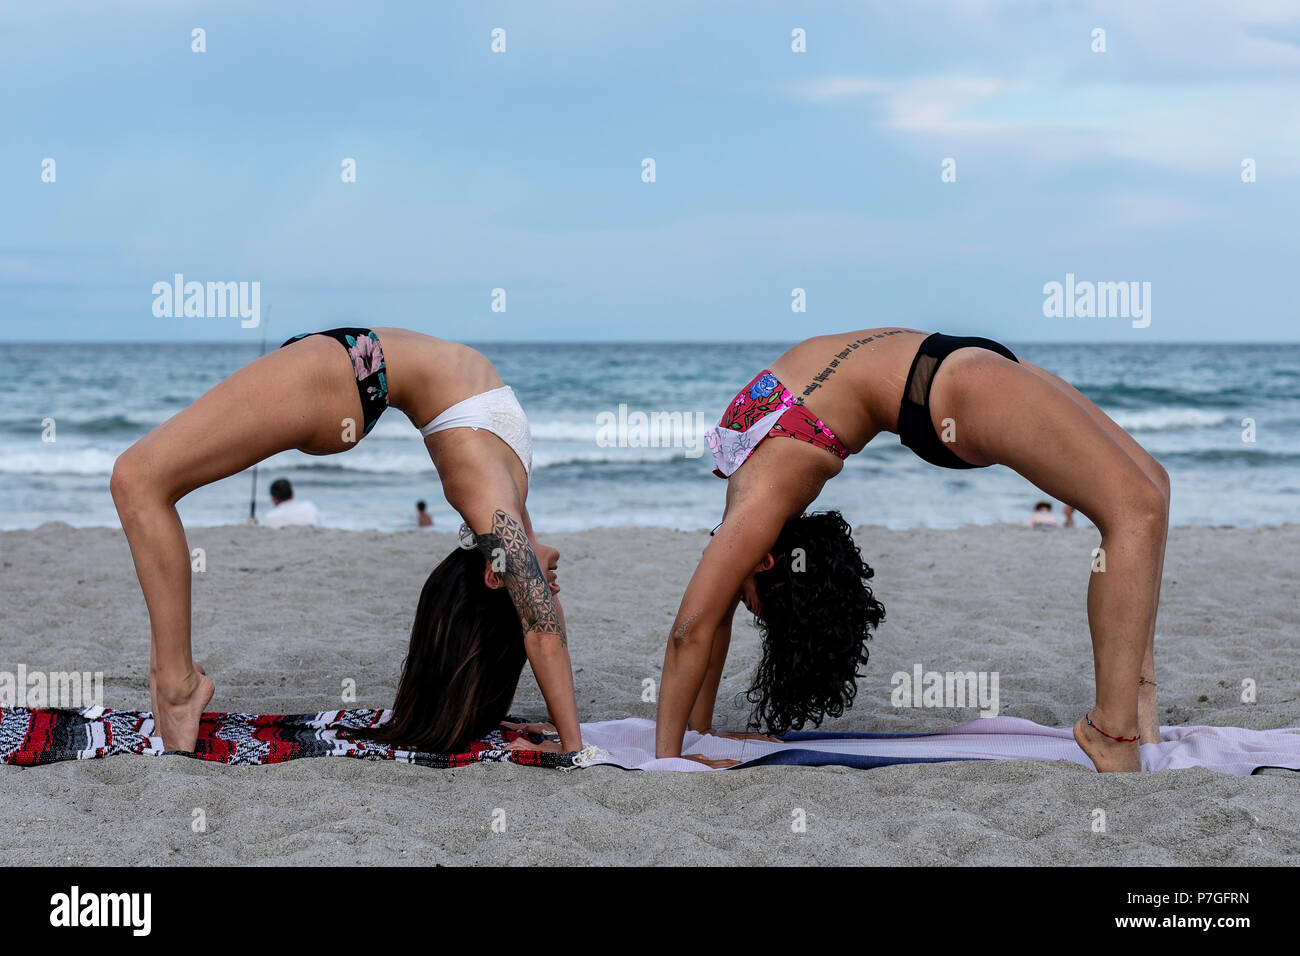 twaalf Gelach Doorzichtig Two women wearing bikinis doing a yoga workout on the beach at sunset Stock  Photo - Alamy